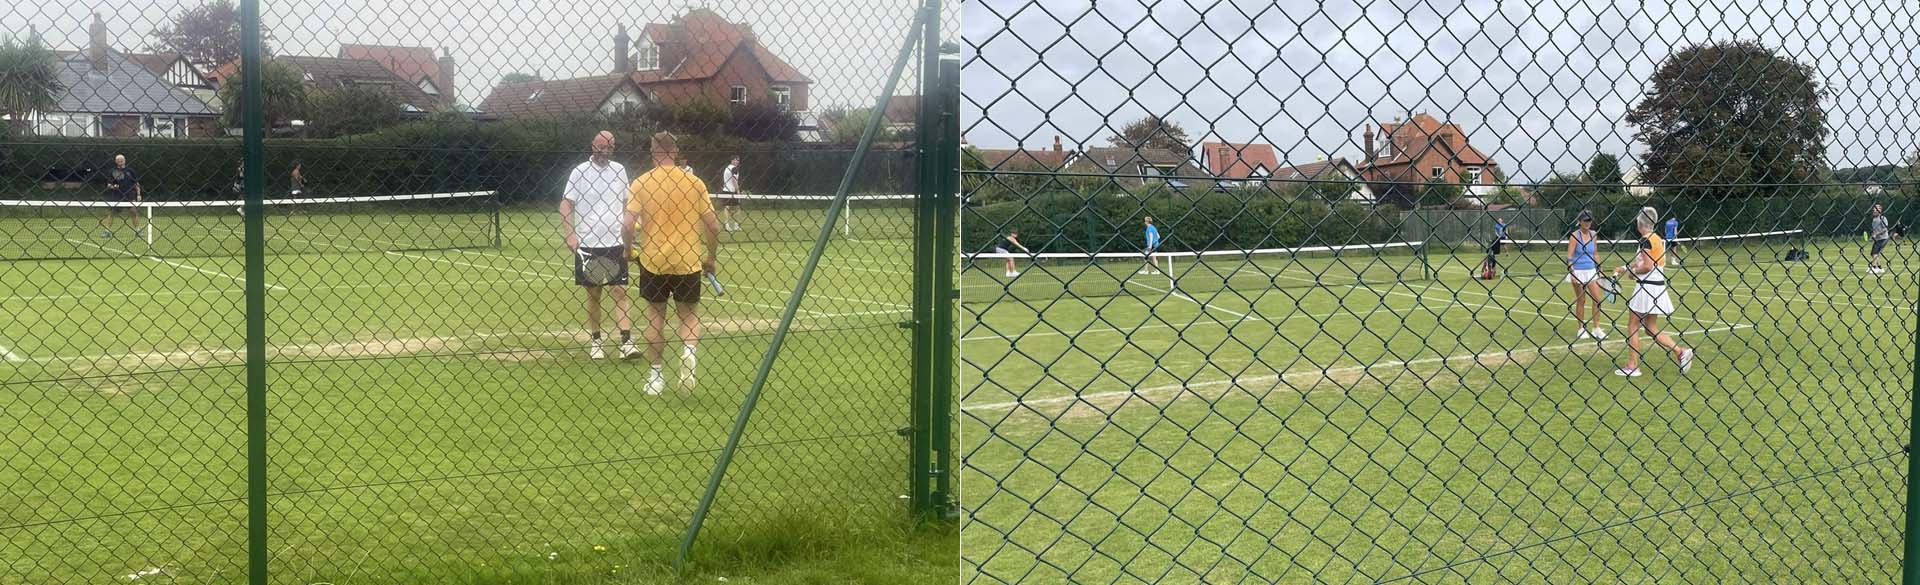 Adult Coaching Felixstowe Lawn Tennis Club